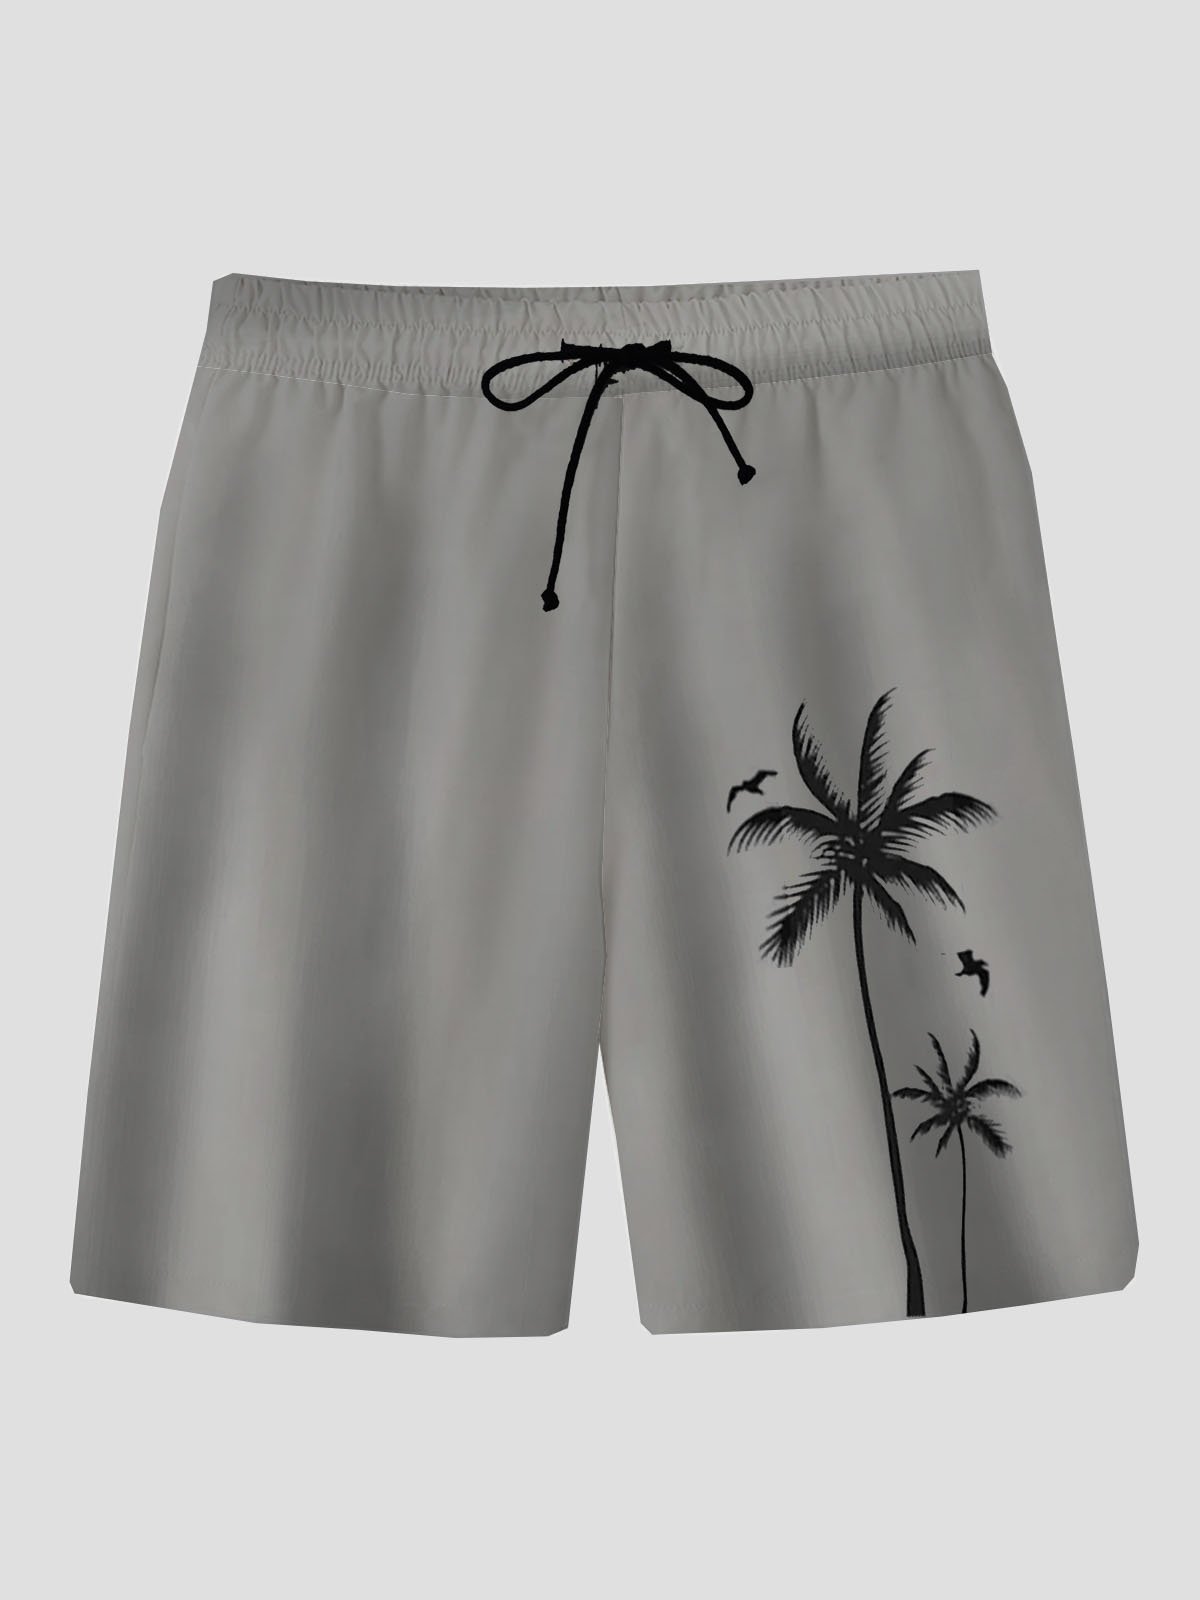 Royaura Hawaiian Coco Contrast Color Men's Shirt And Shorts Set